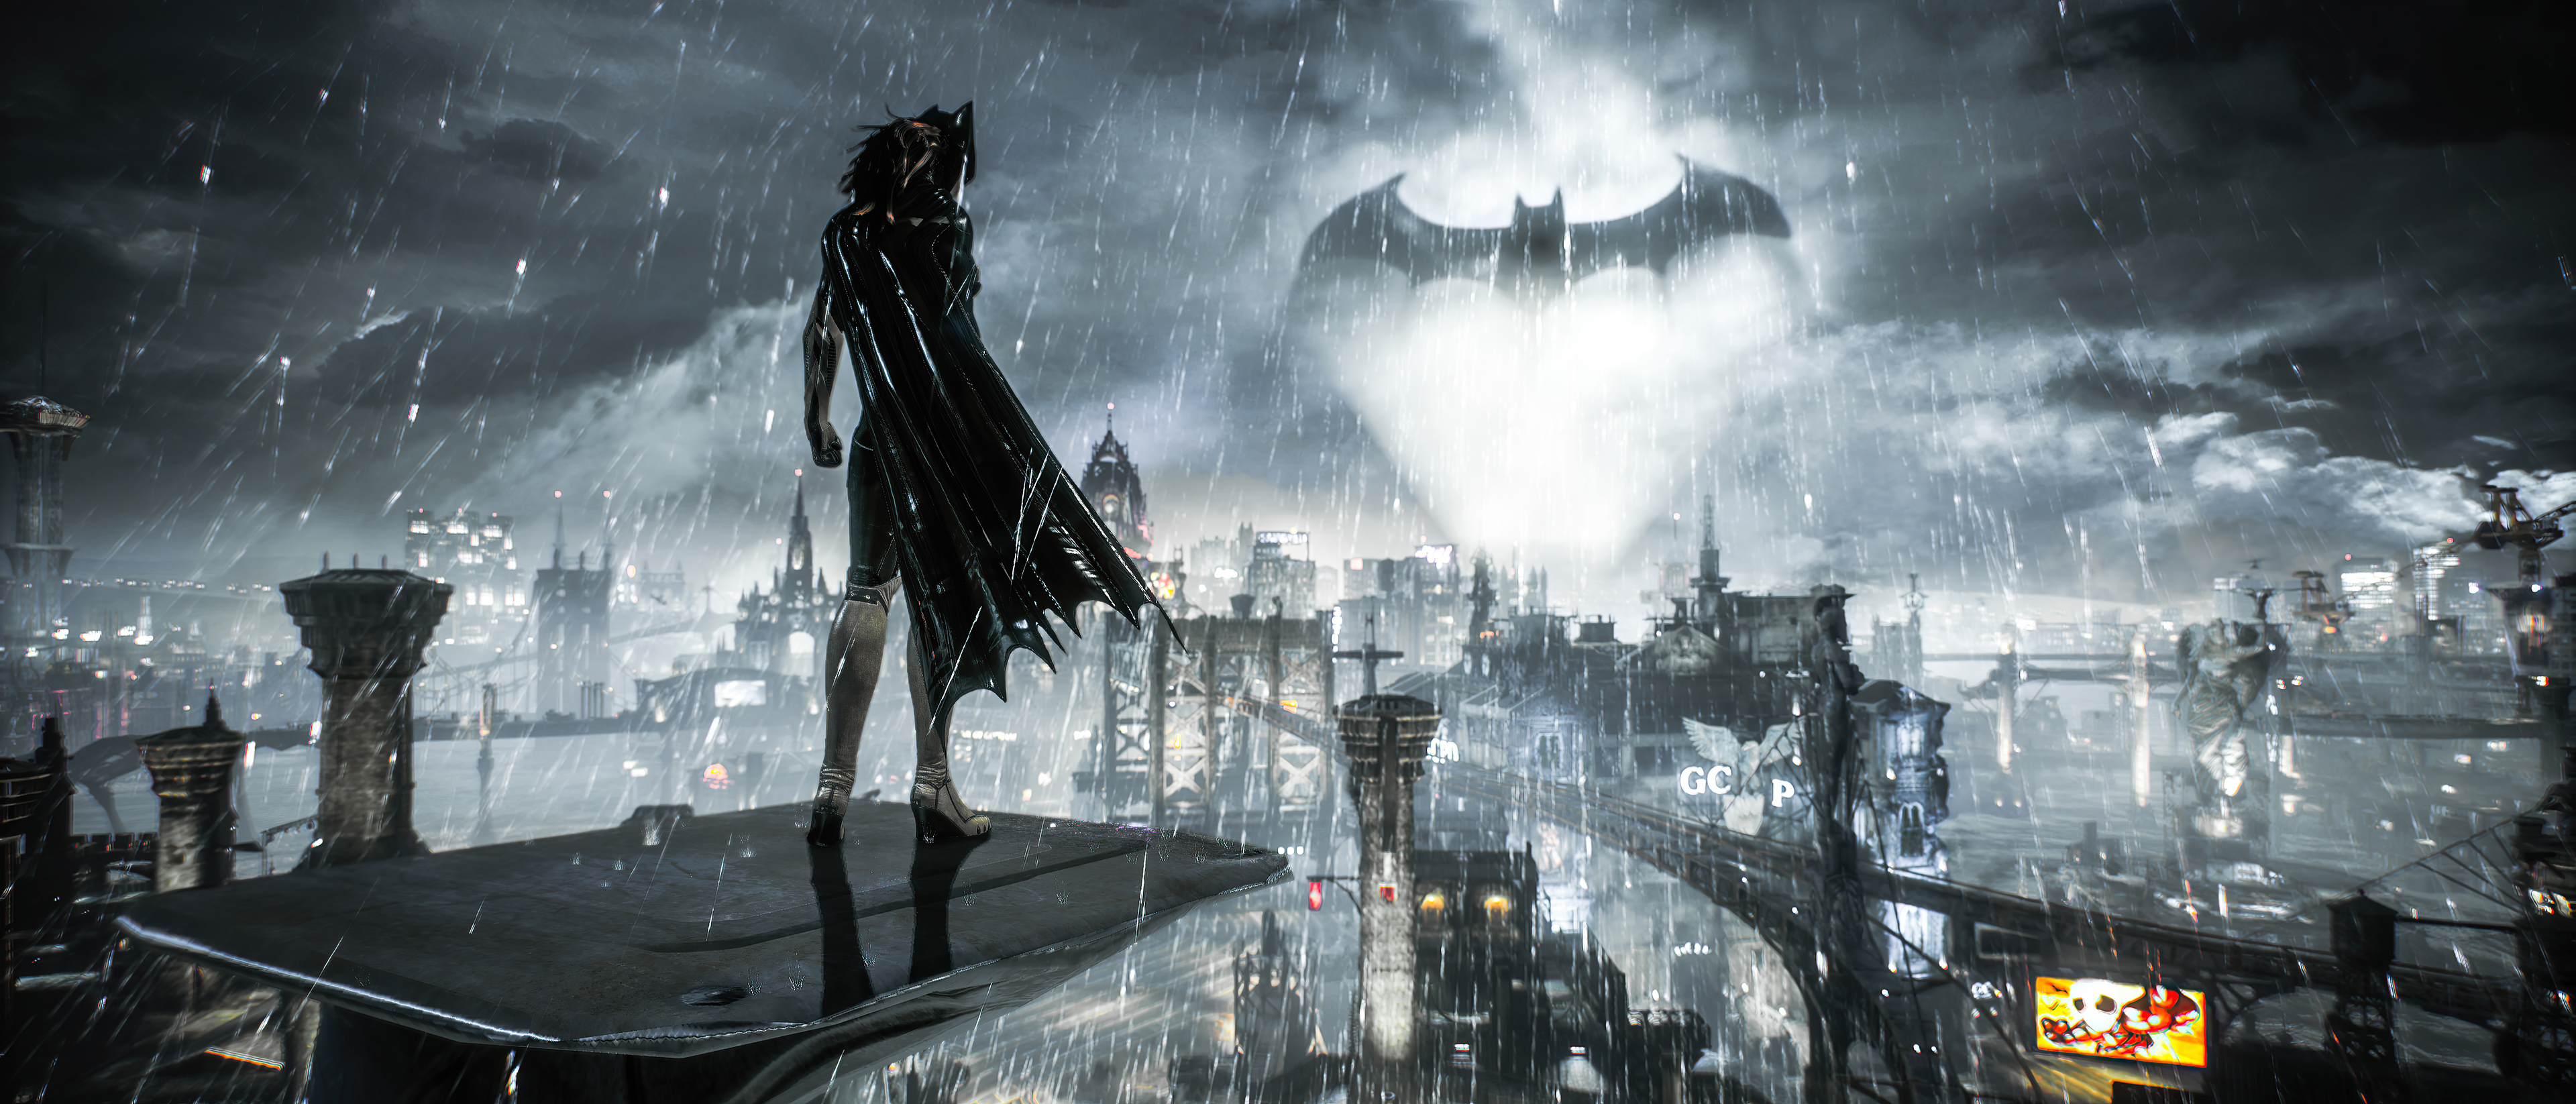 Batman Arkham Knight Wallpaper Download